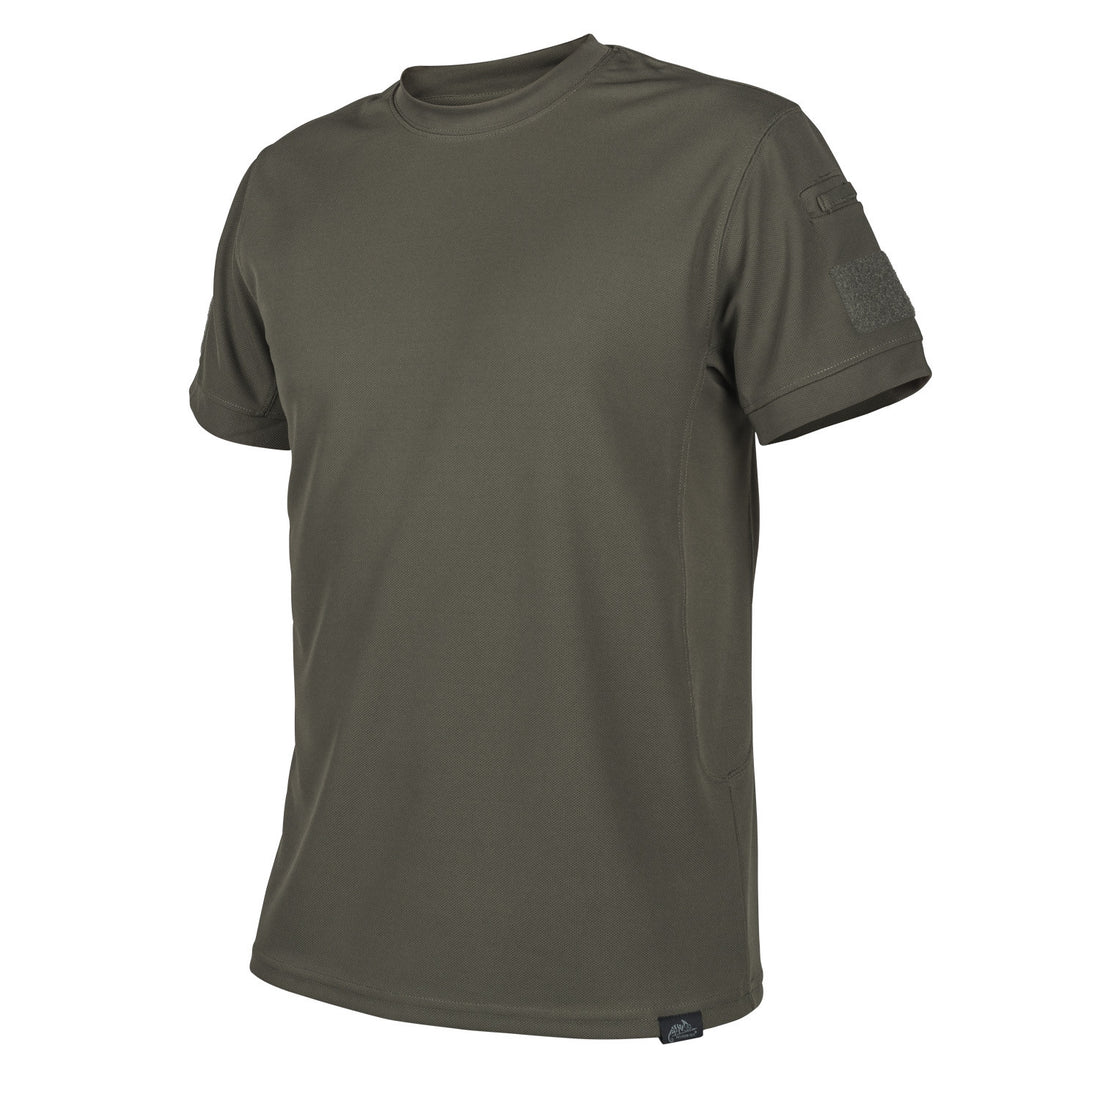 TACTICAL T-Shirt - TopCool NEW - Target KSA - متجر هدف